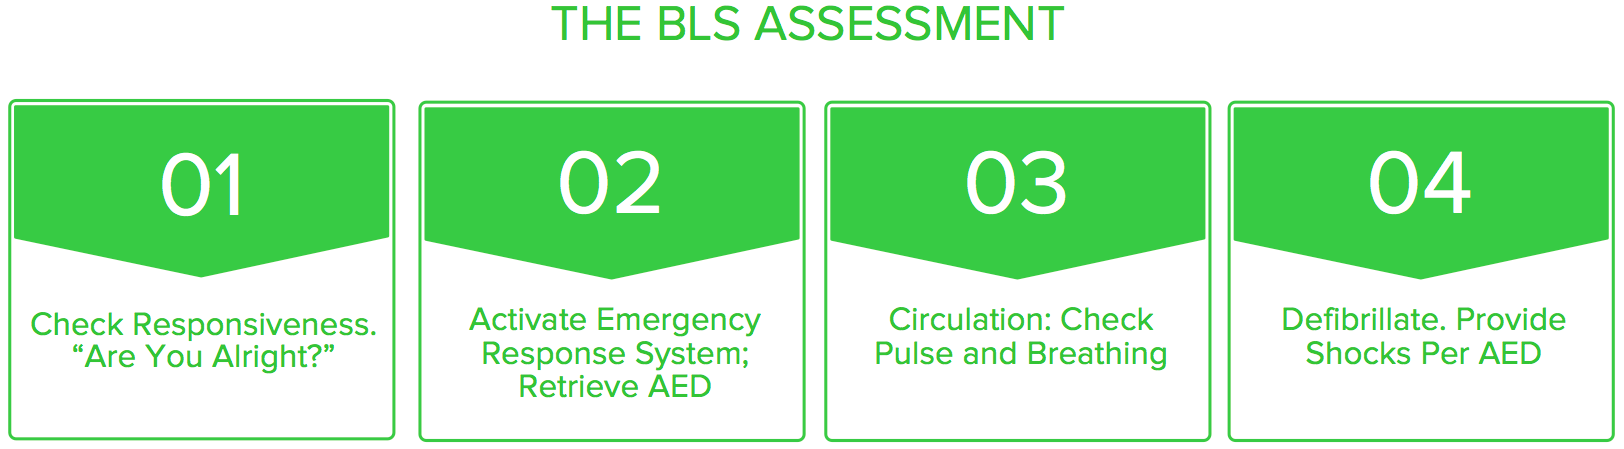 BLS assessment